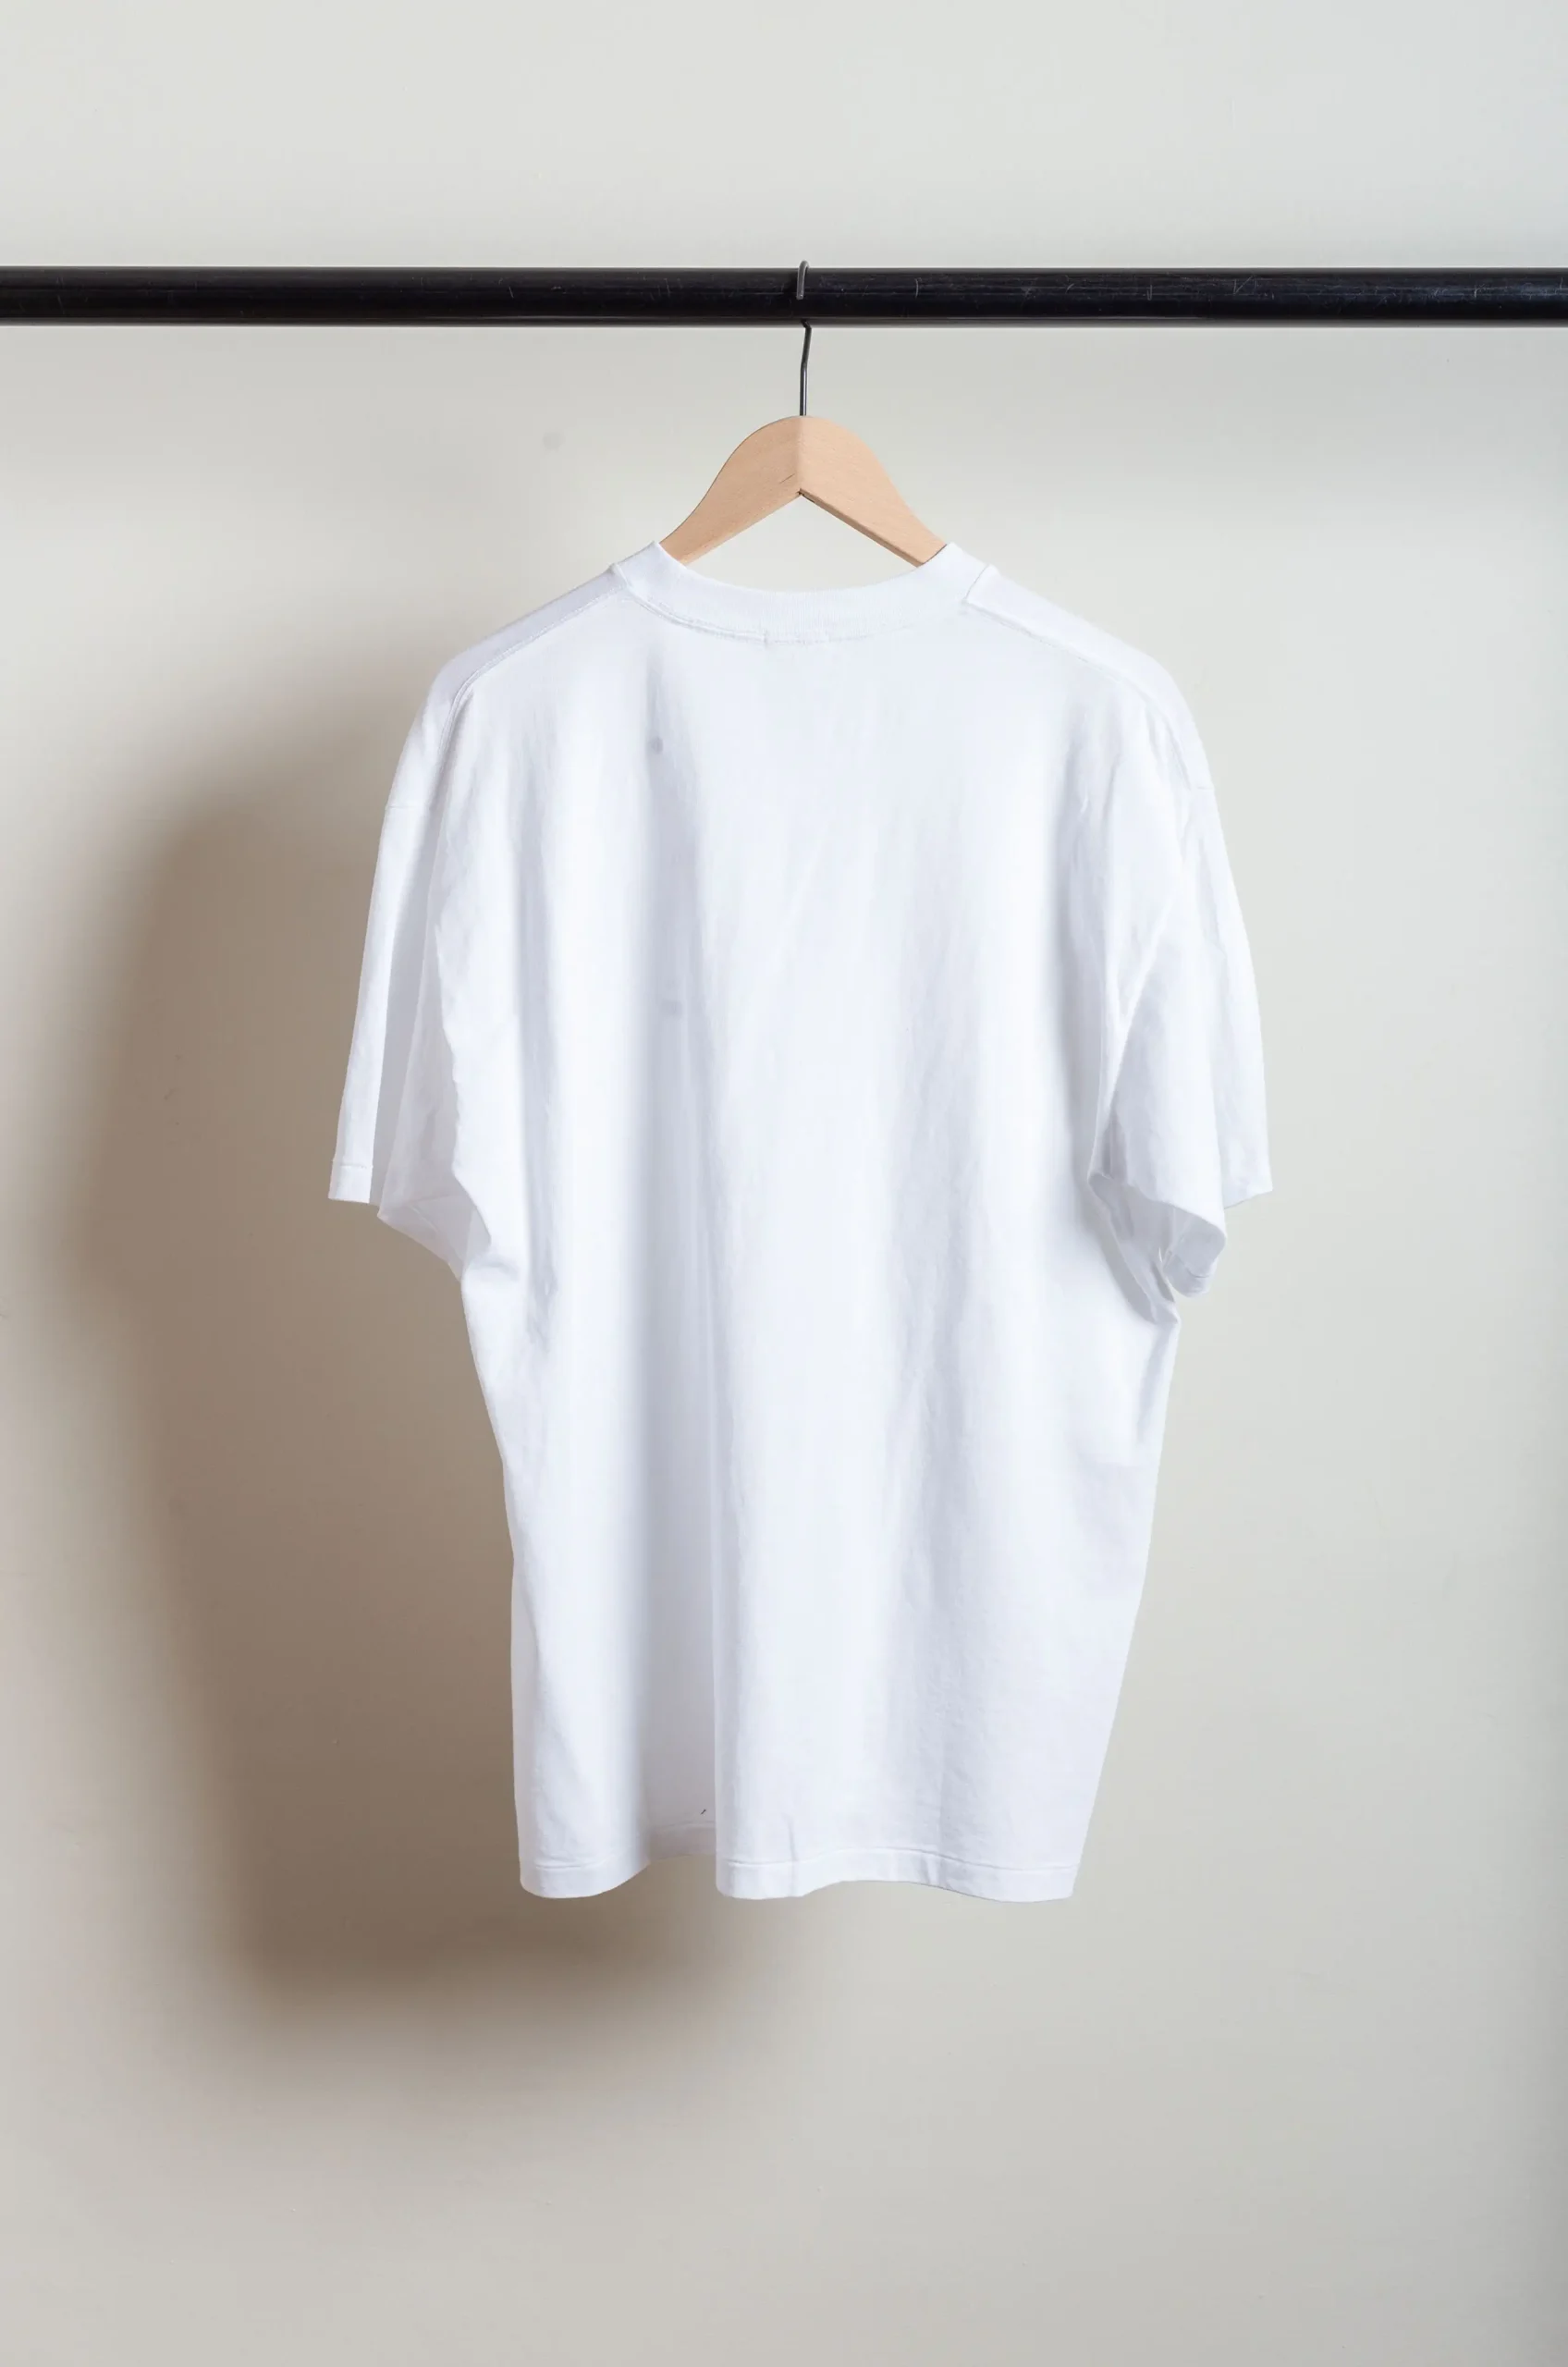 Comoli - T-Shirt Z01-05010 - White